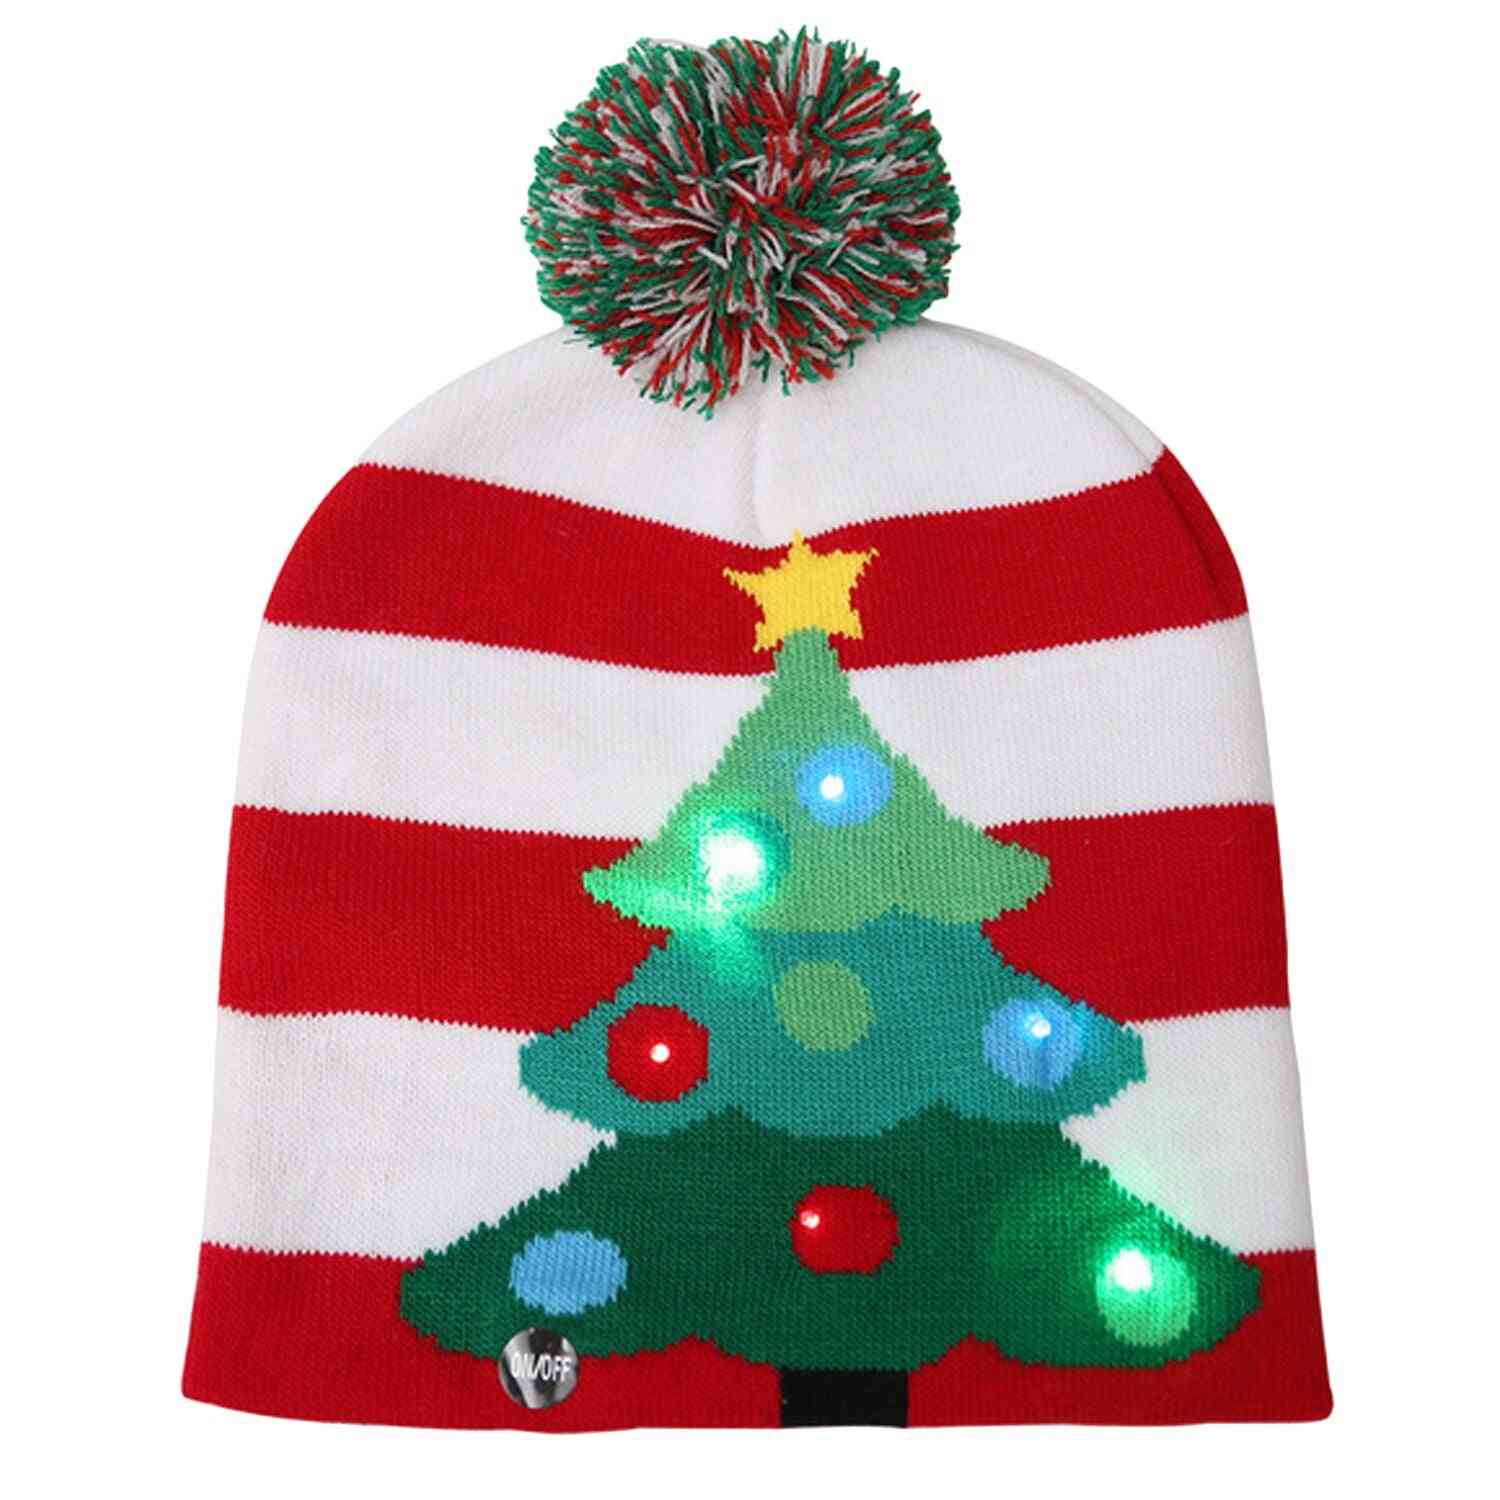 Kreative süße Mode warme LED Weihnachtswinter Strickmütze